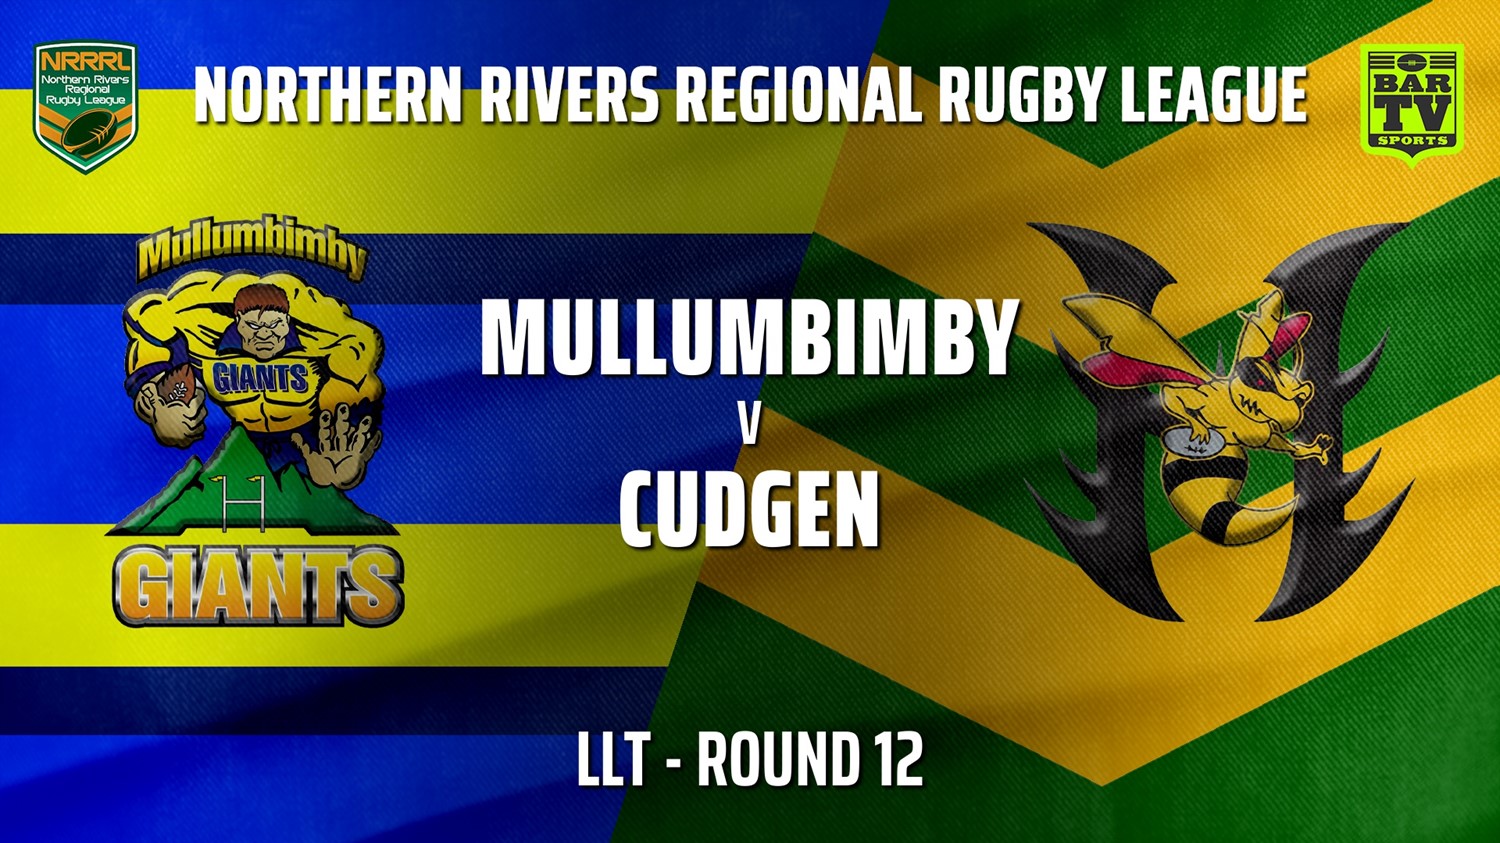 210725-Northern Rivers Round 12 - LLT - Mullumbimby Giants v Cudgen Hornets Slate Image